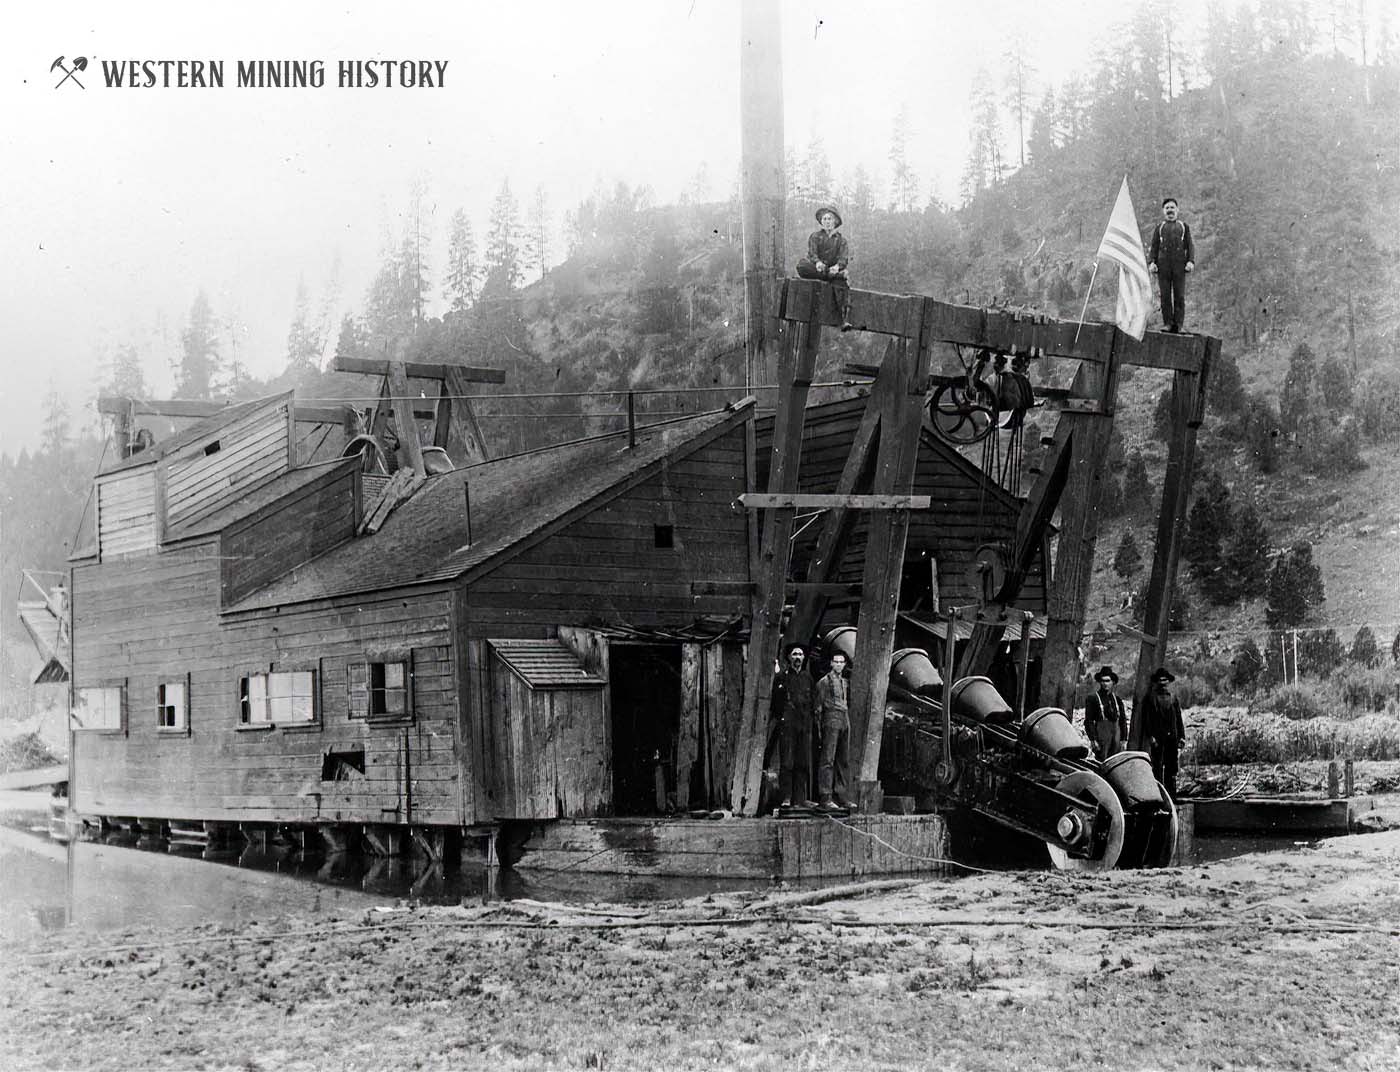 First gold dredge at Idaho City